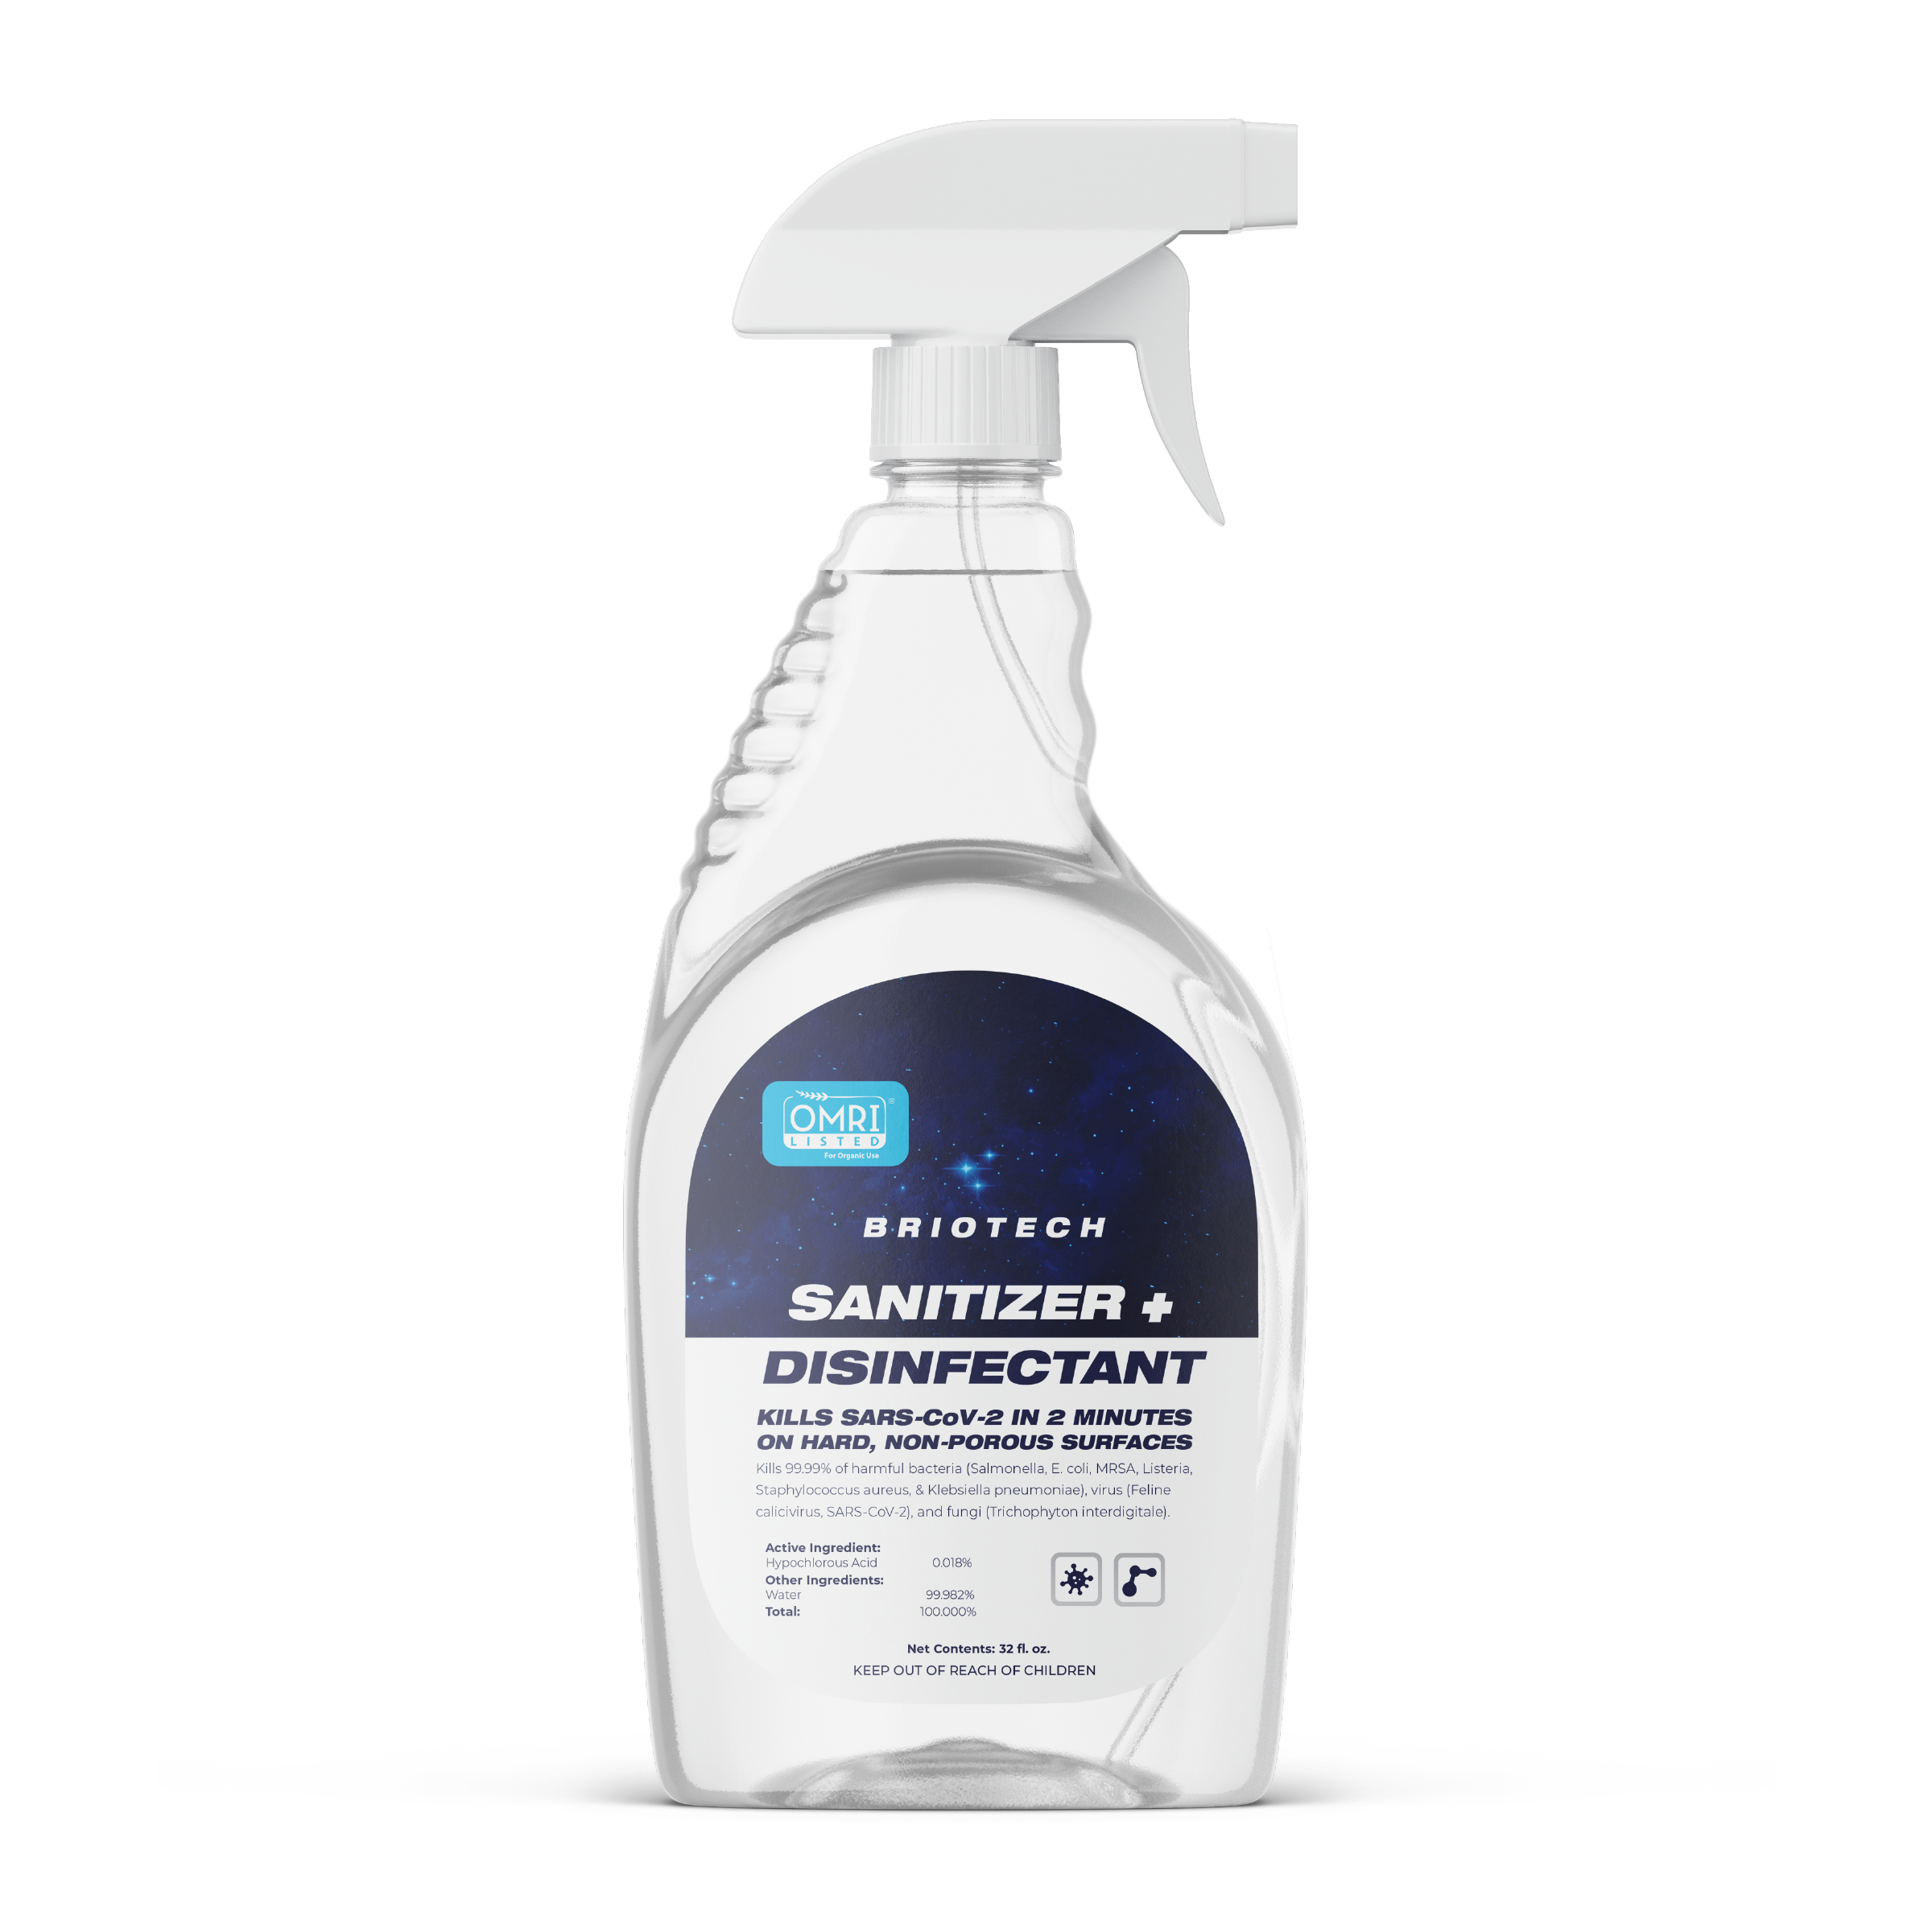 Sanitizer + Disinfectant